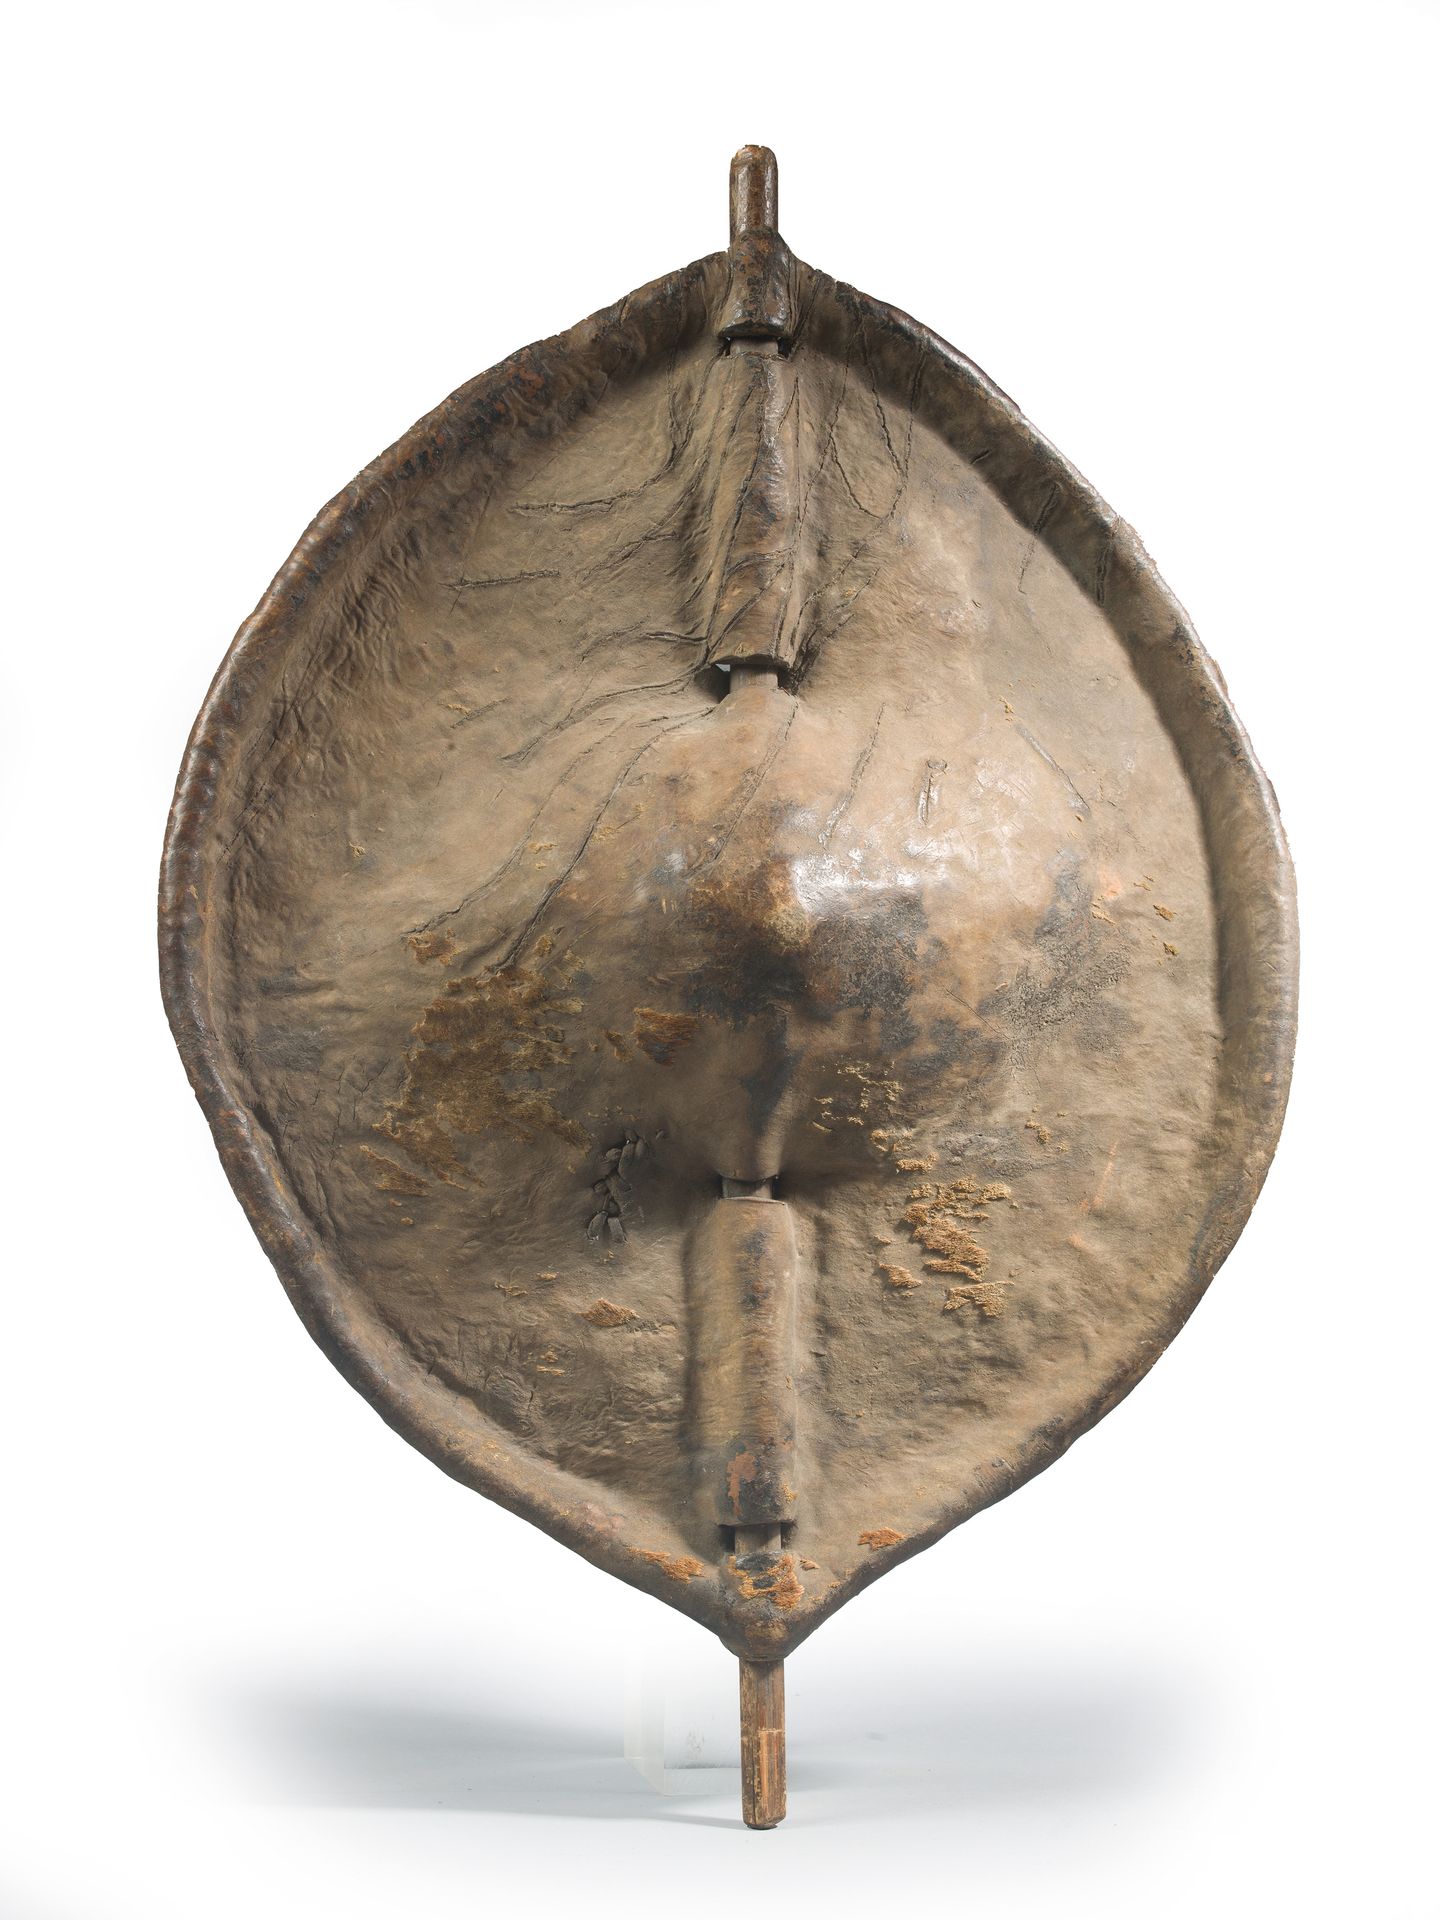 Null DINKA桶

苏丹 19-20世纪

木头和皮肤

49 x 69 厘米